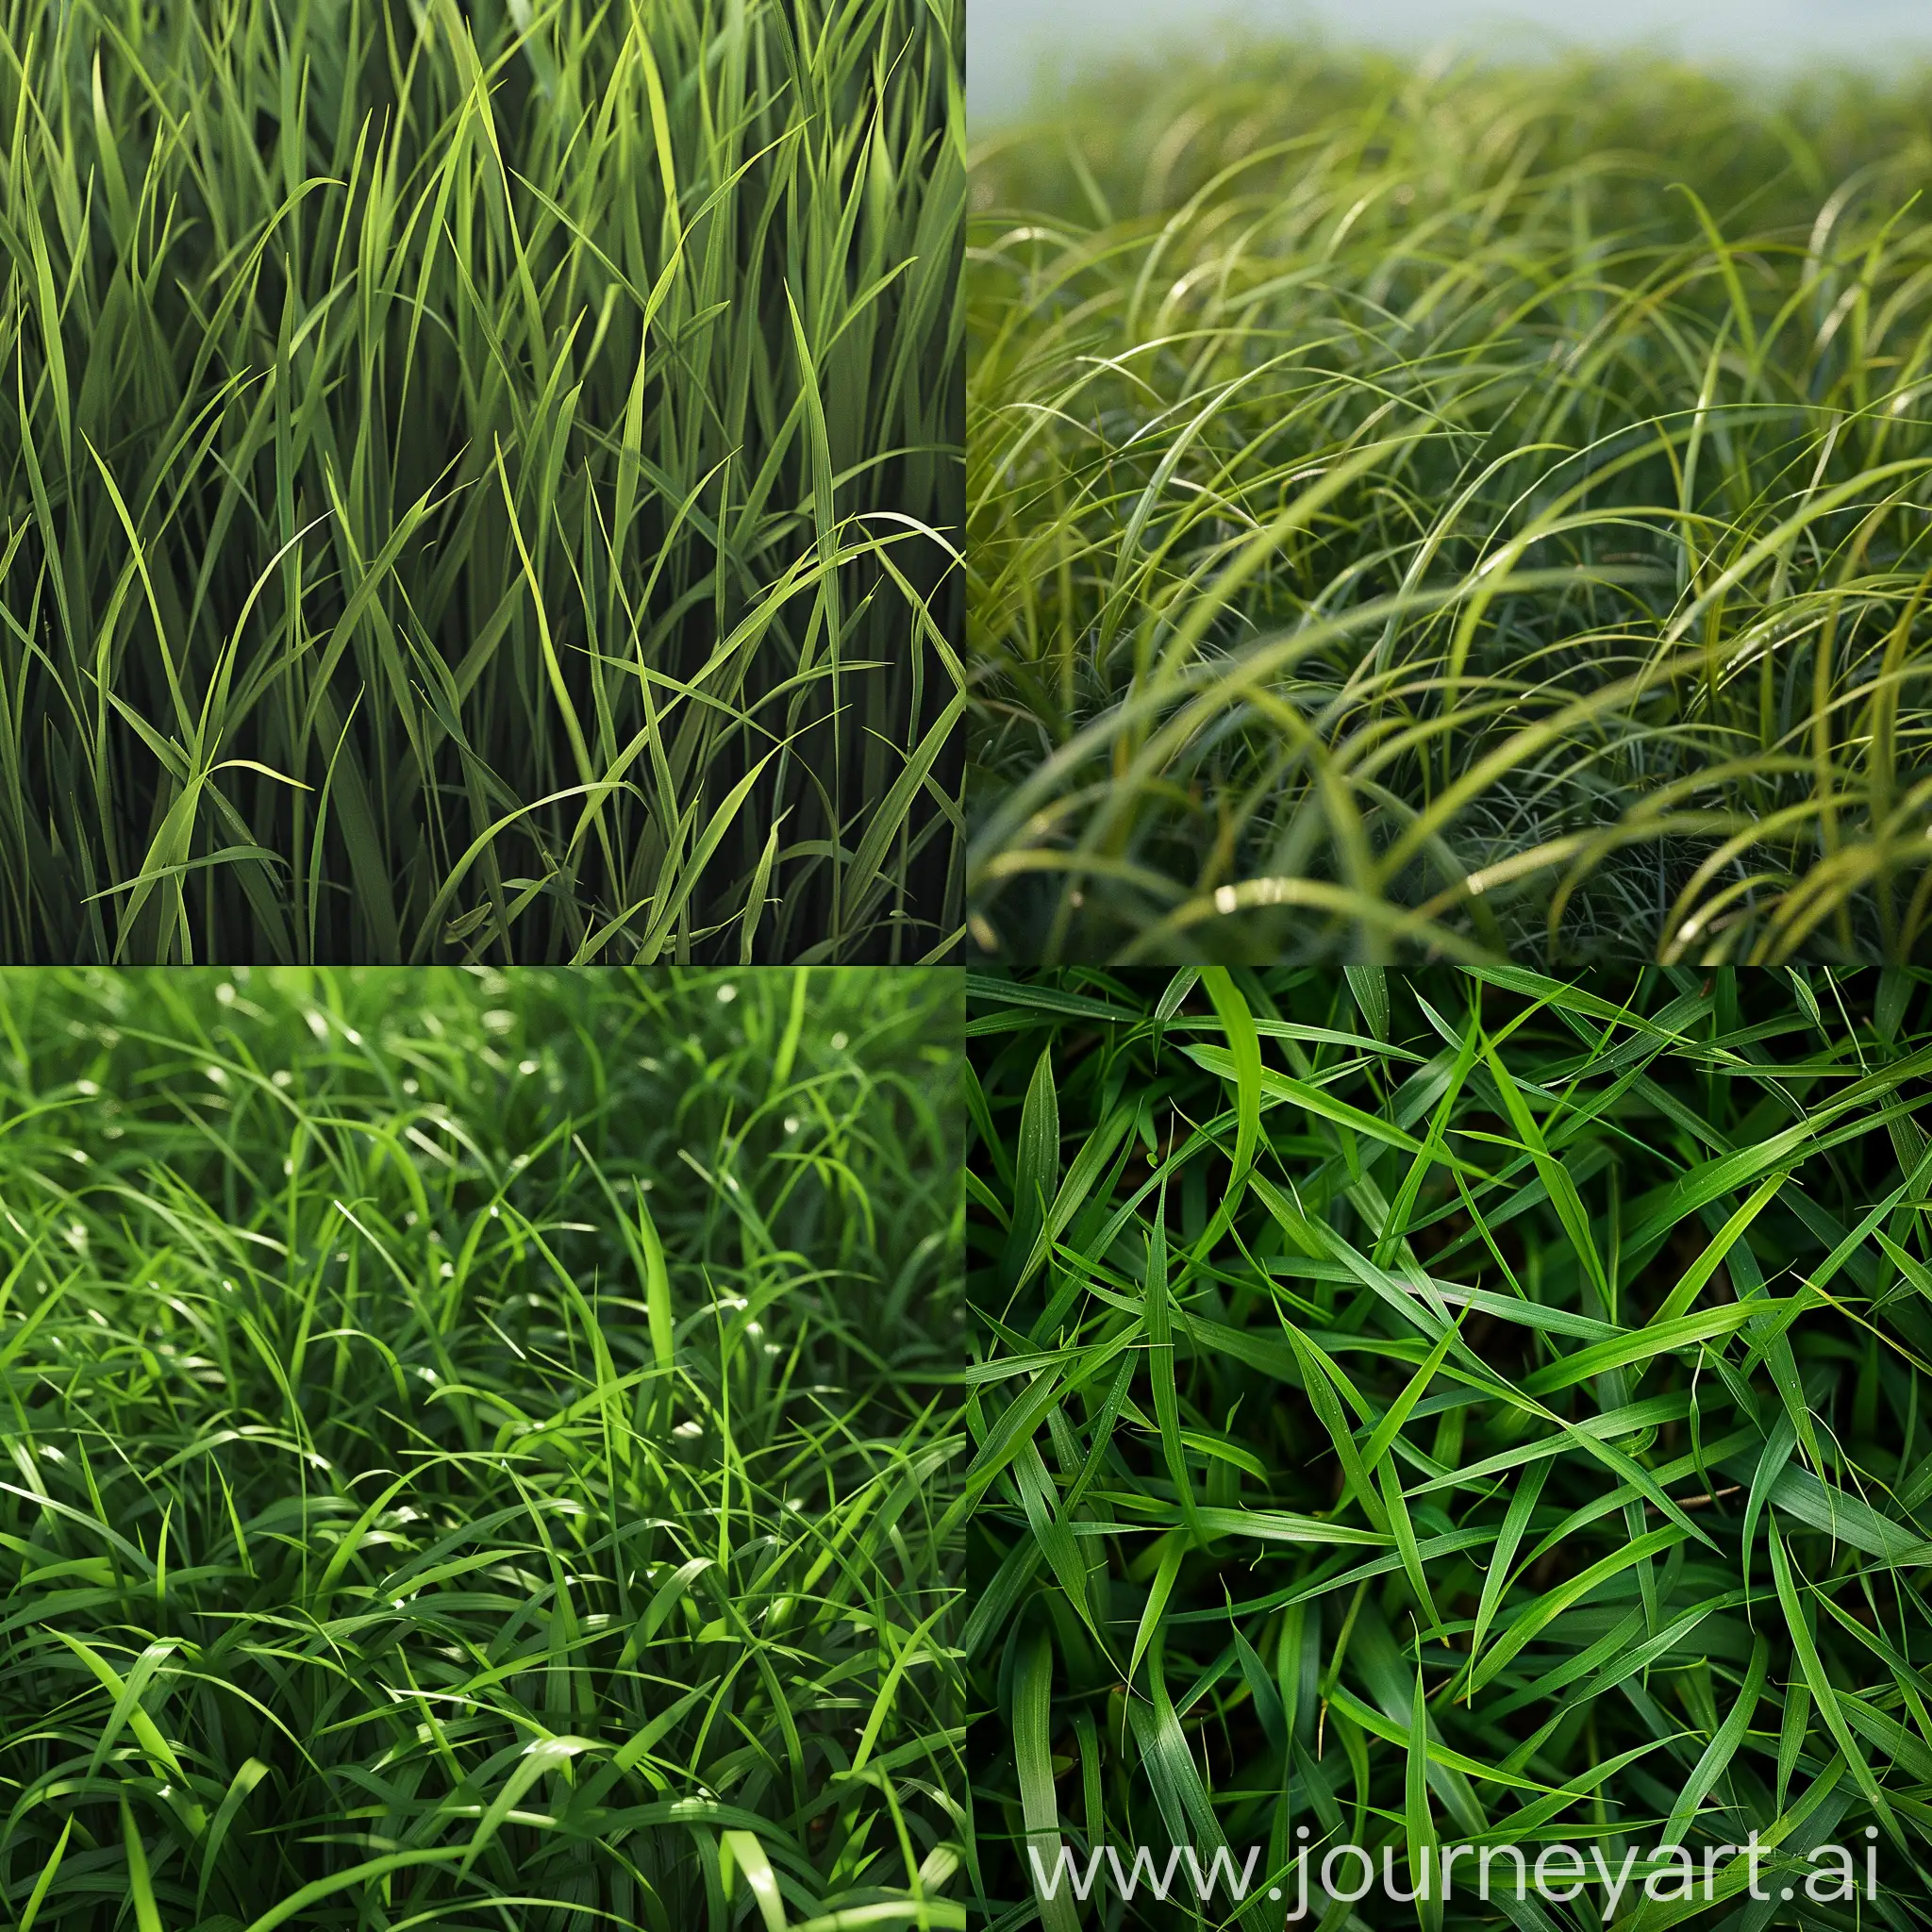 Vibrant-Green-Grass-Texture-Background